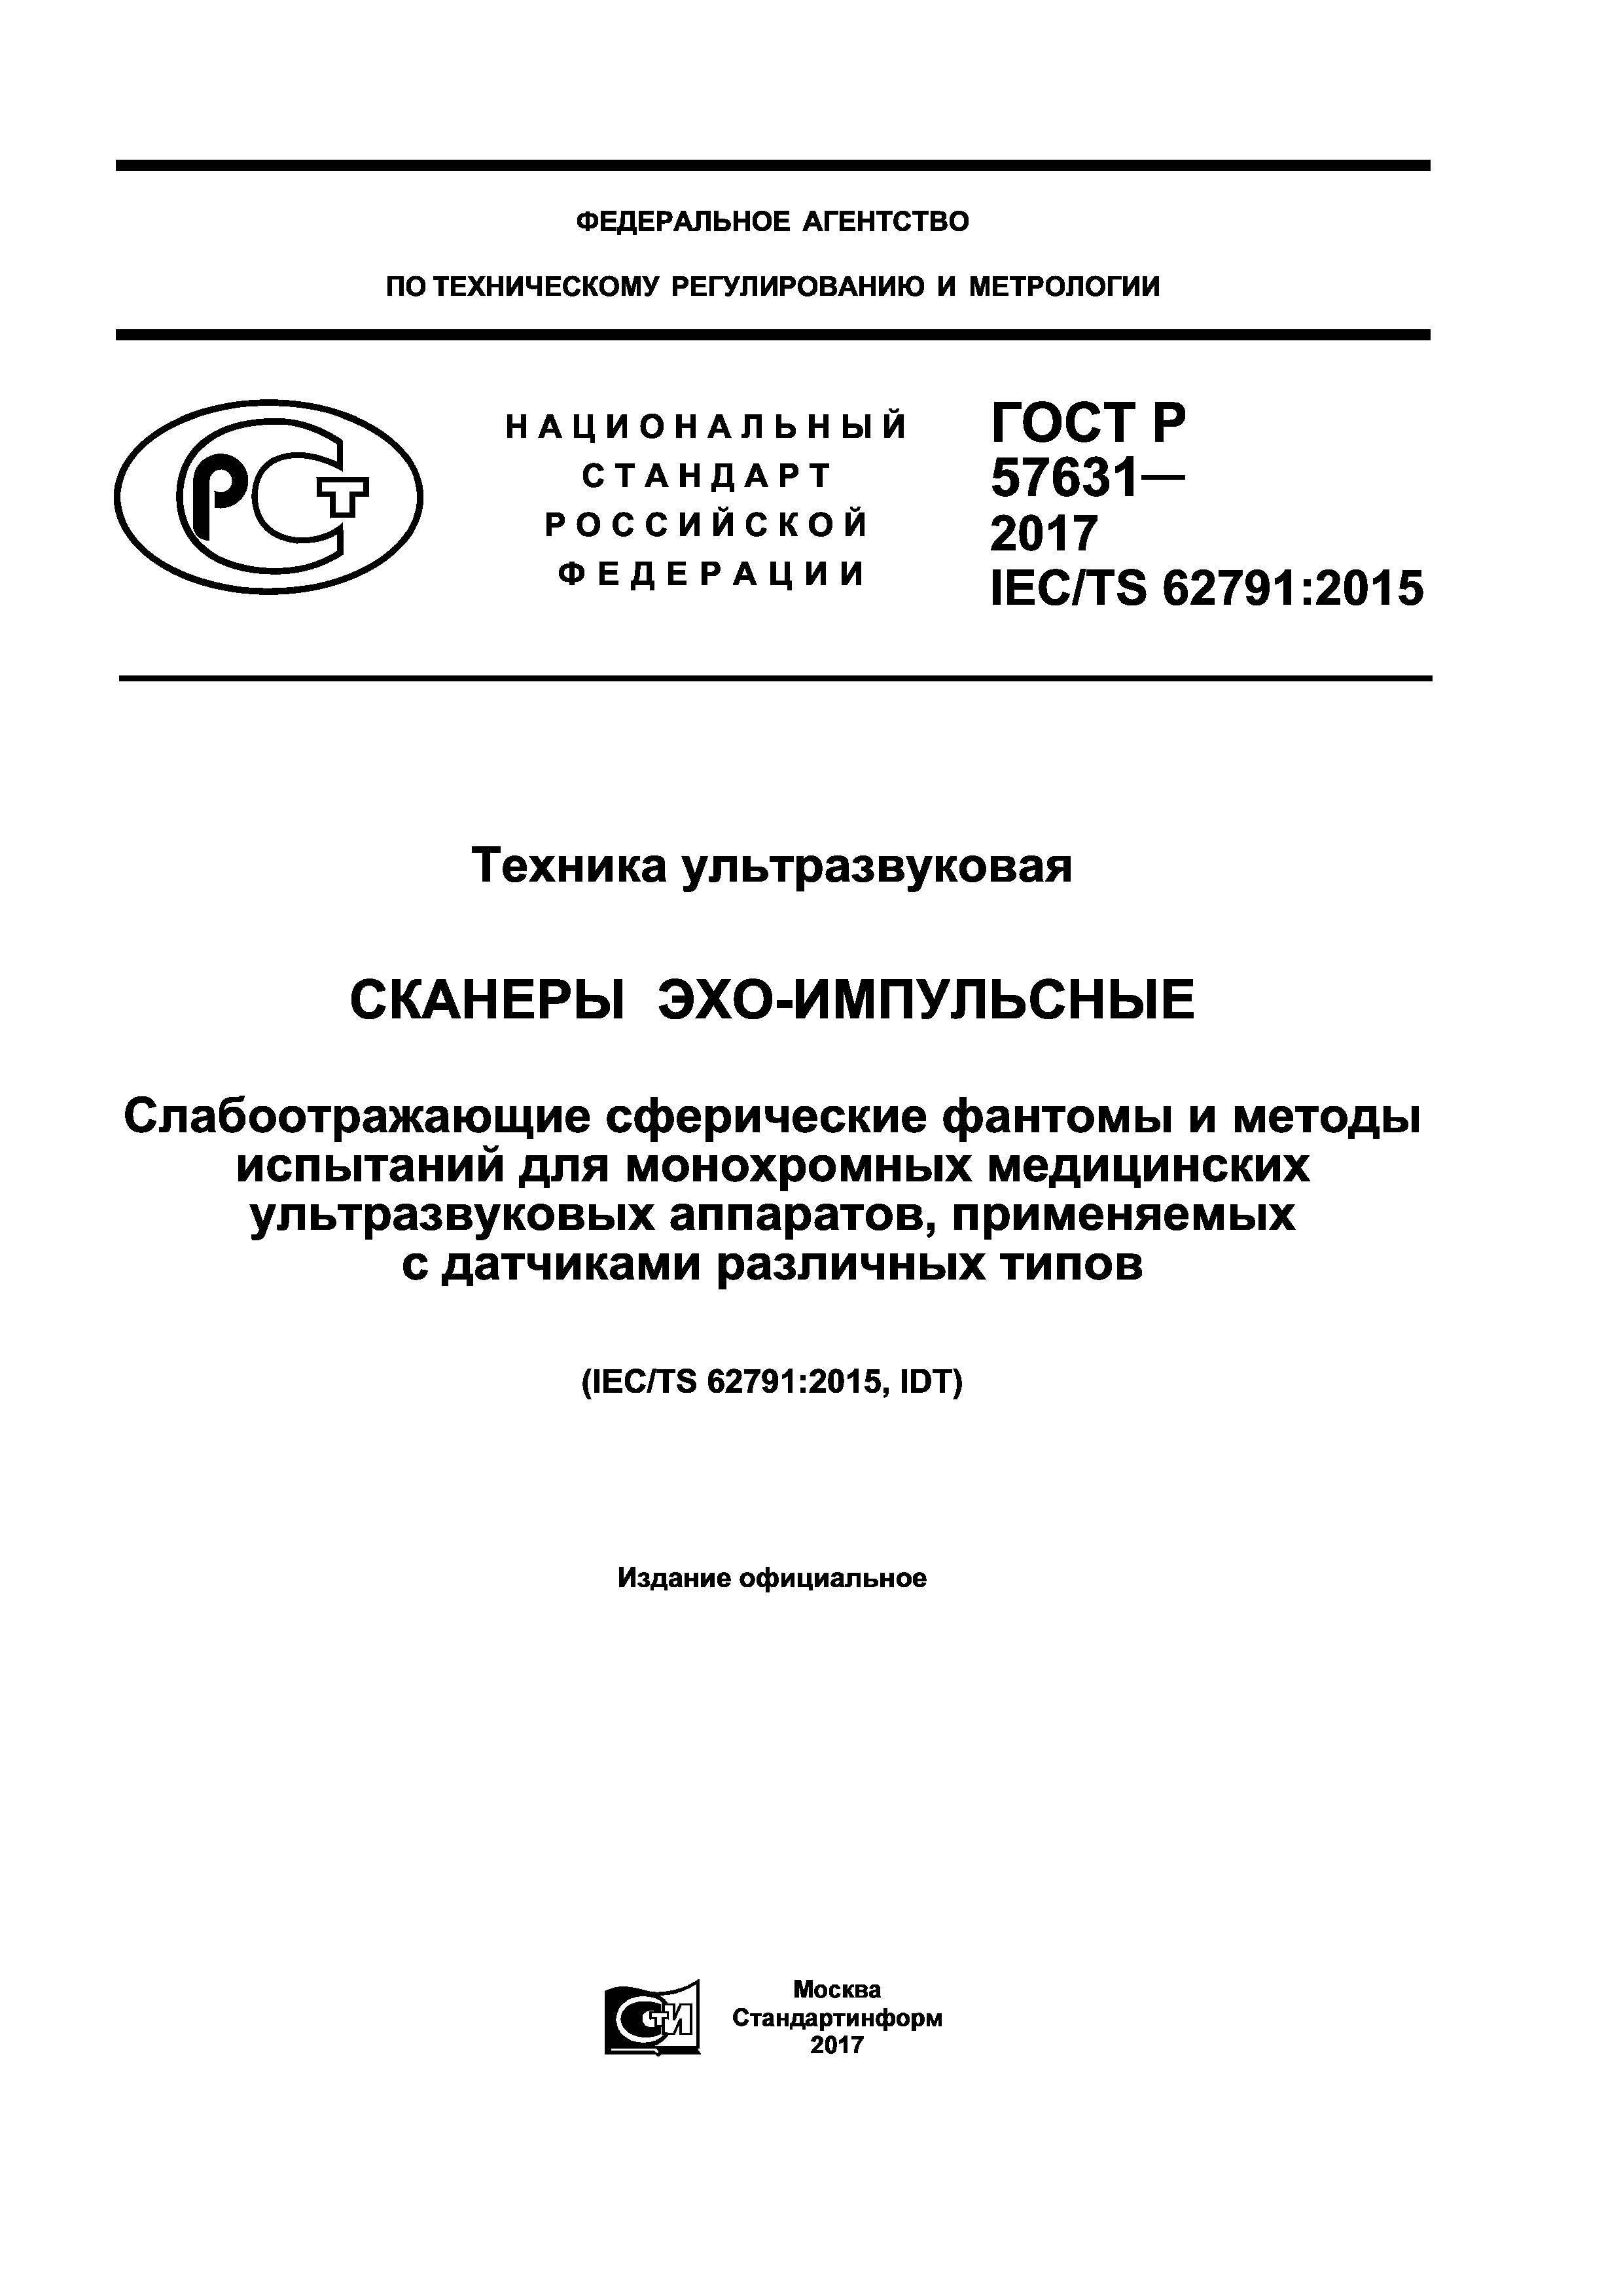 ГОСТ Р 57631-2017